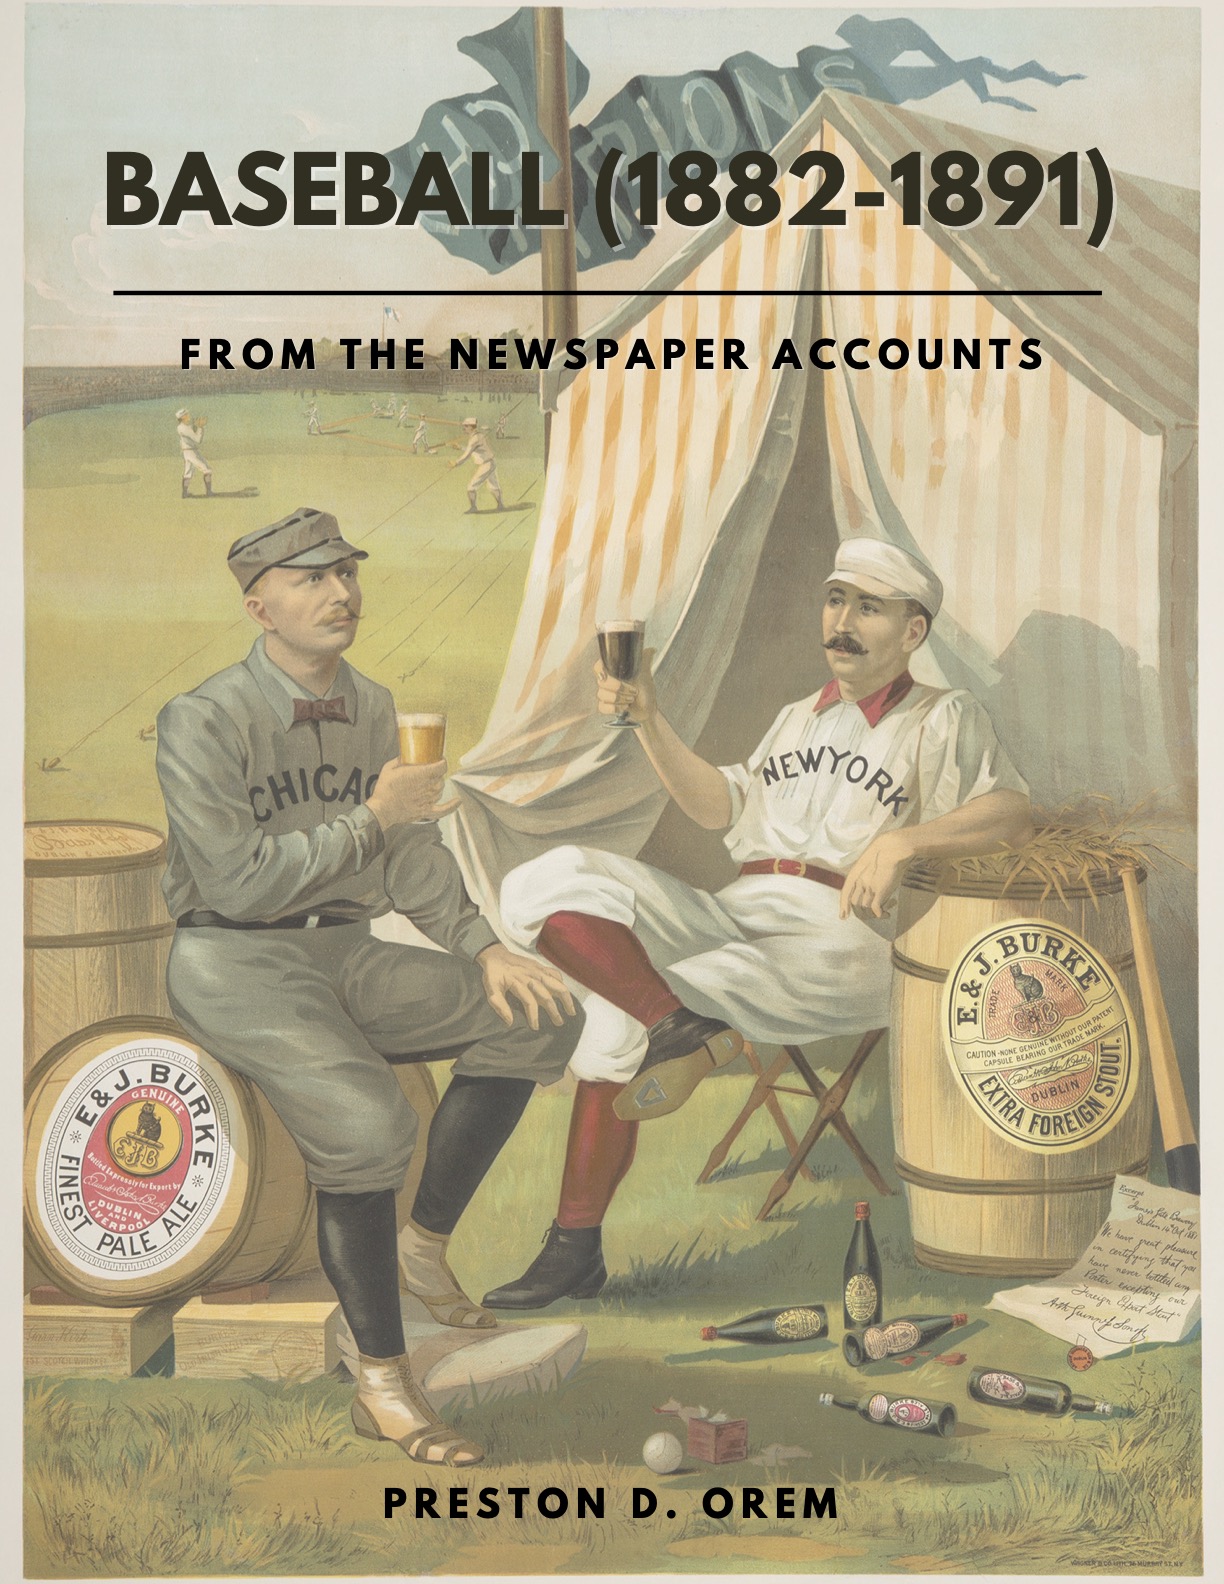 Preston Orem's Baseball From the Newspaper Accounts (1882-1891)